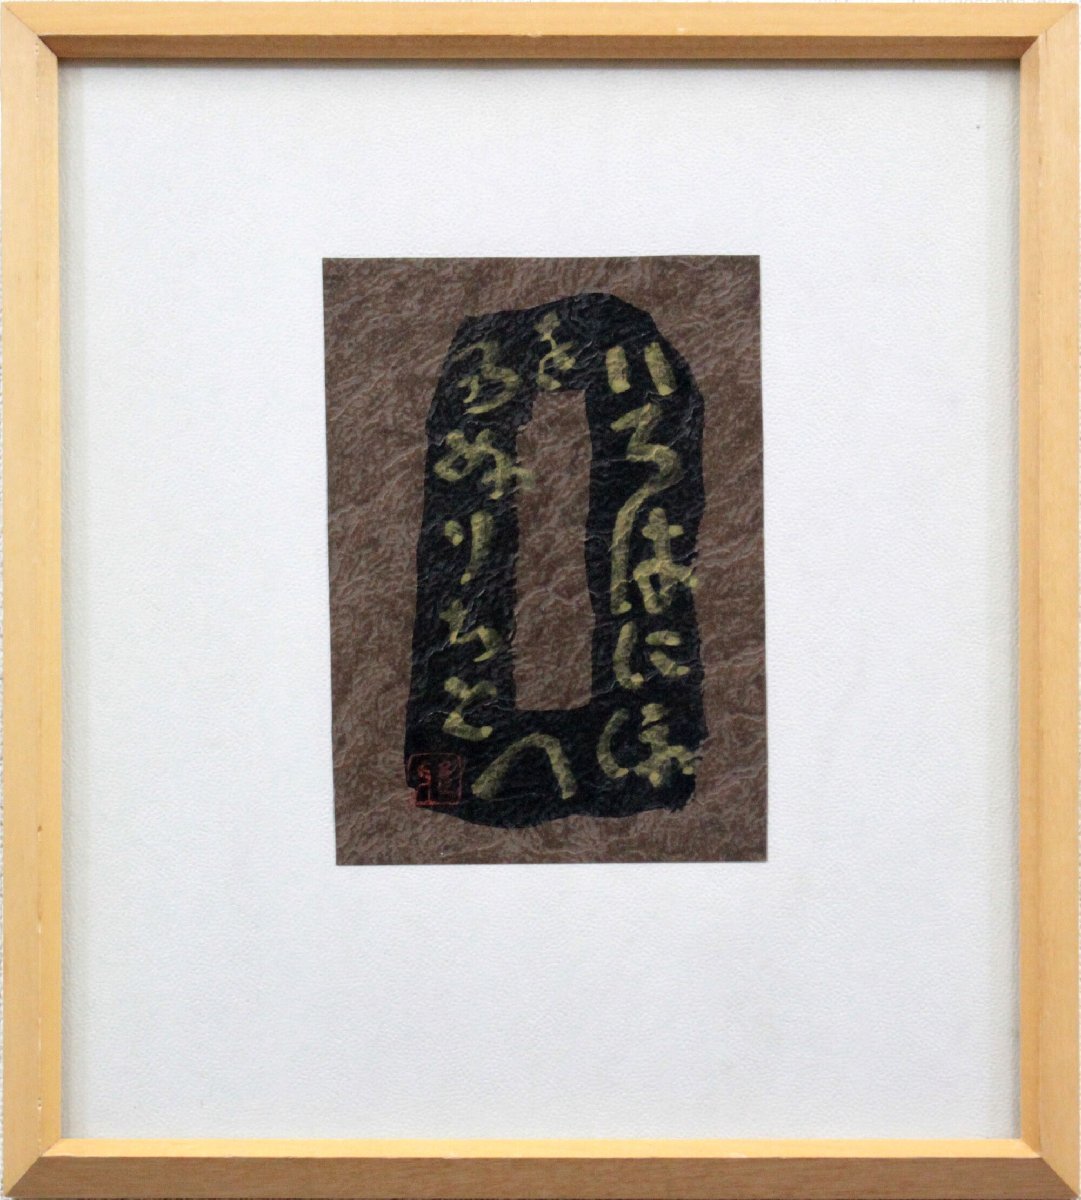 Higuchi Masayamabo Iroha ni hohe to chirinuru wo peint à la main [Authentique garanti] Peinture - Hokkaido Gallery, Ouvrages d'art, livre, autres